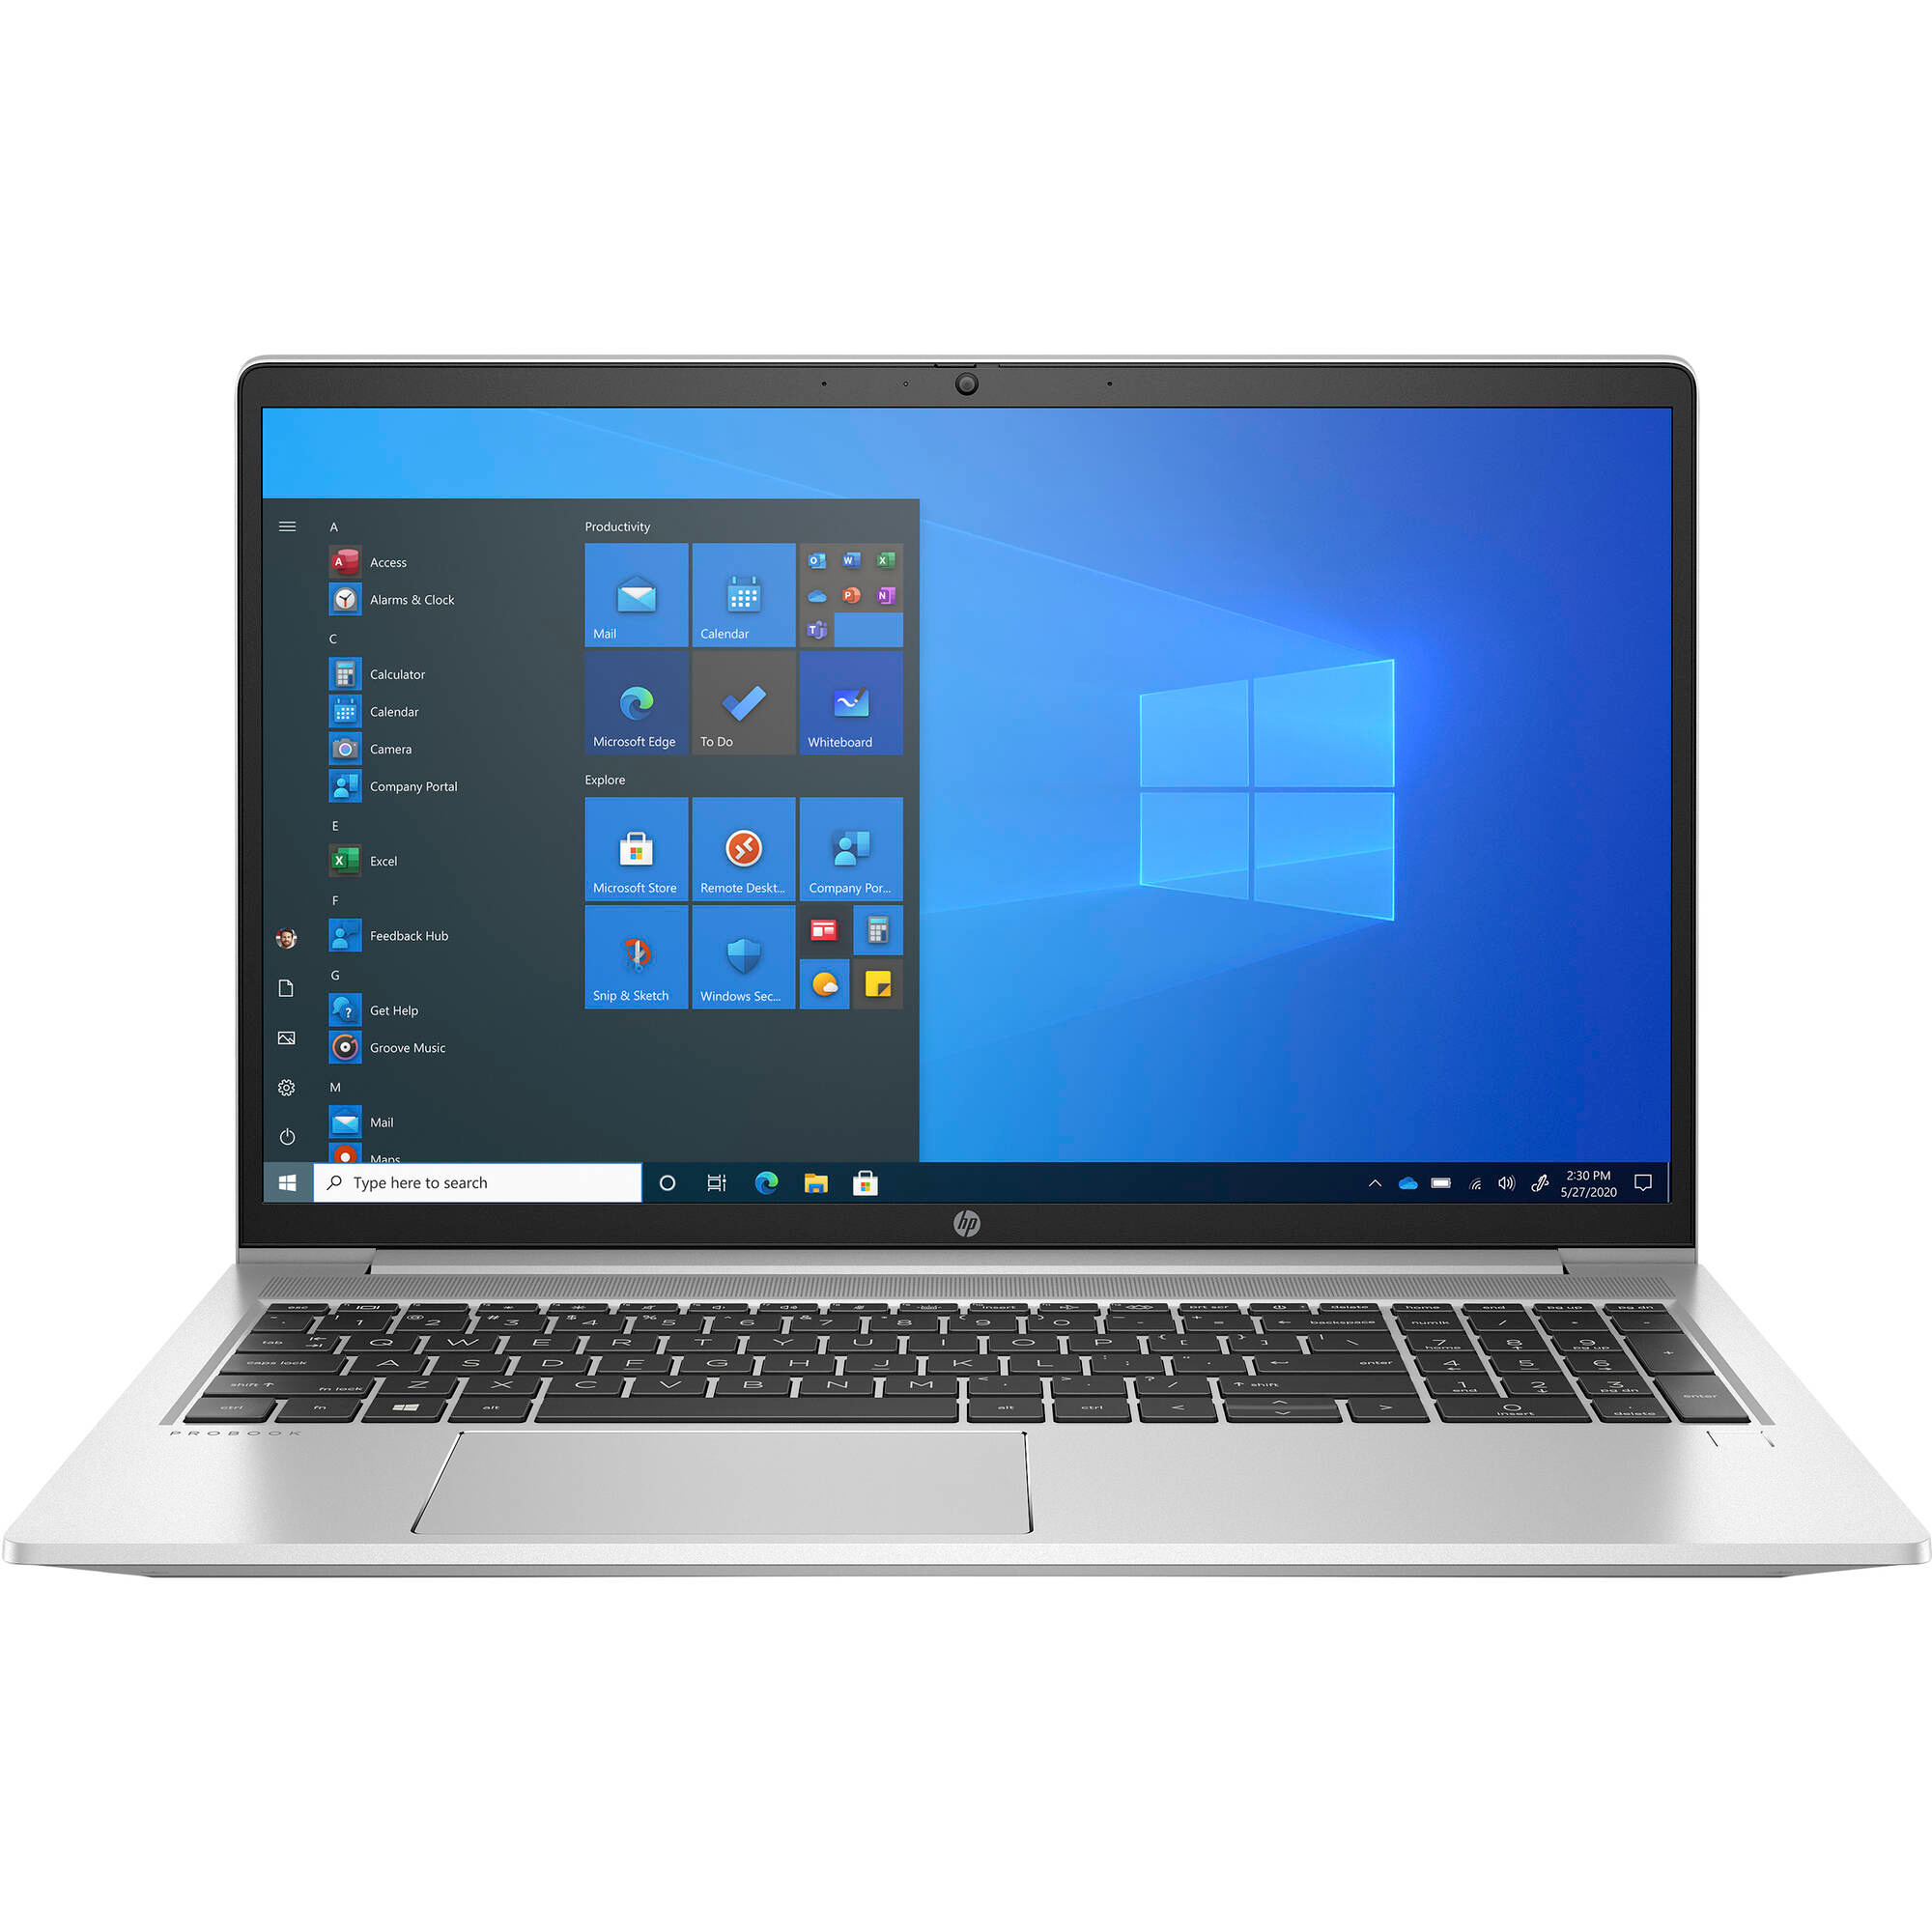 HP Laptop ProBook 450 G8 28K94UT#ABA Intel Core i7 11th Gen 1165G7 (2.80 GHz) 8 GB Memory 256 GB SSD Intel Iris Xe Graphics 15.6in Windows 10 Pro 64-bit